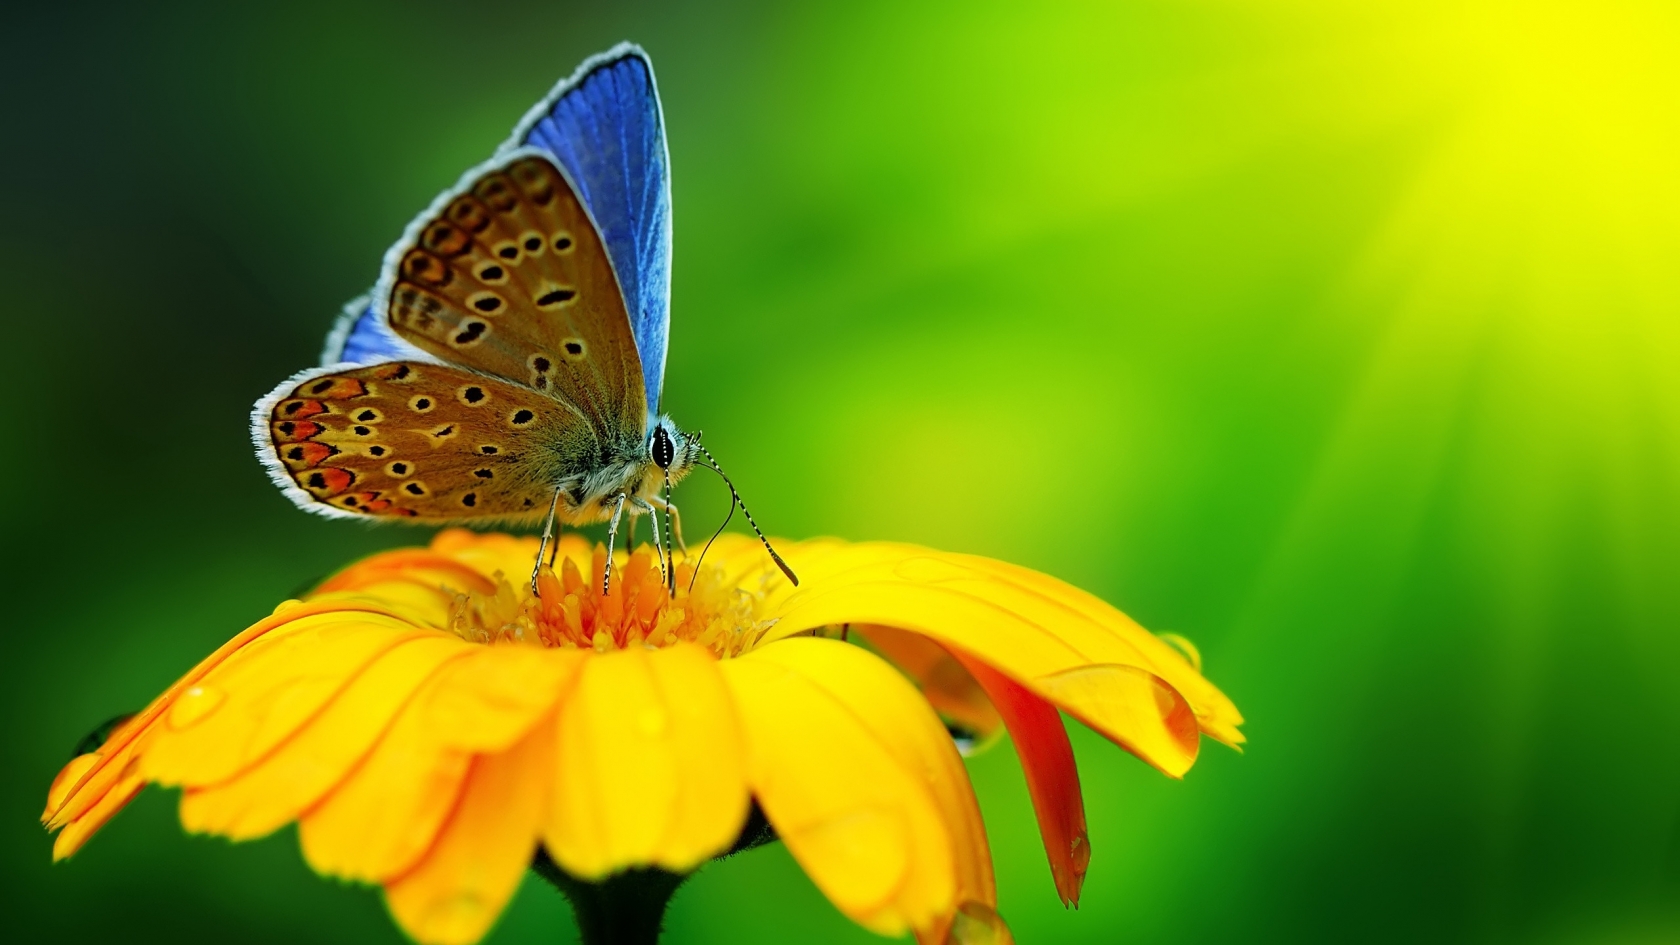 Butterfly Pollen for 1680 x 945 HDTV resolution